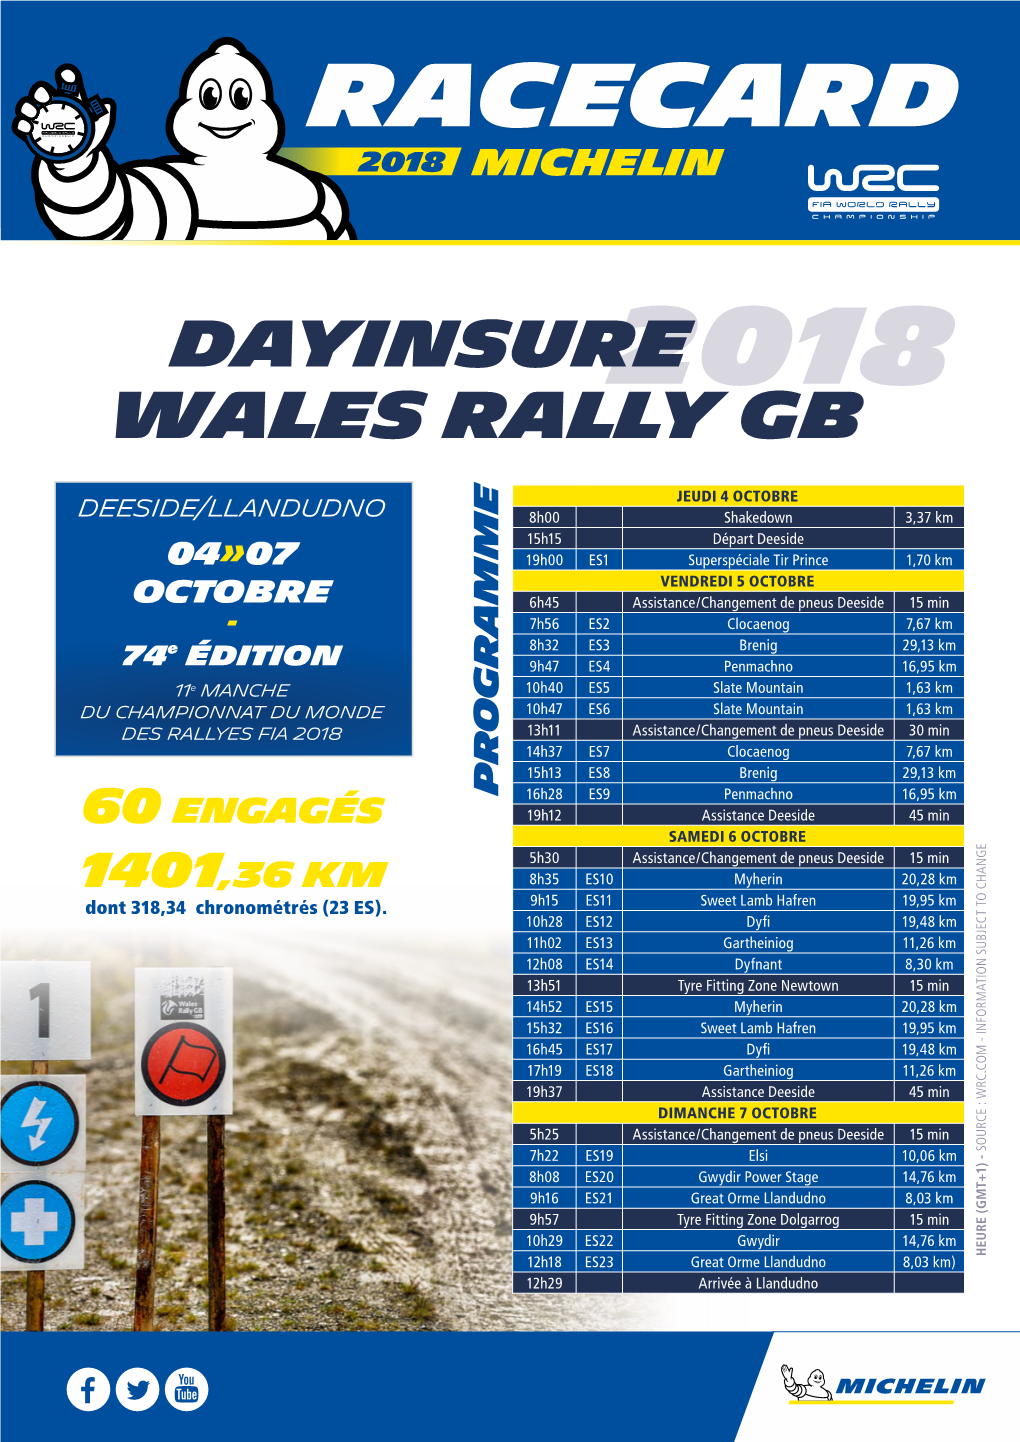 Dayinsure Wales Rally Gb